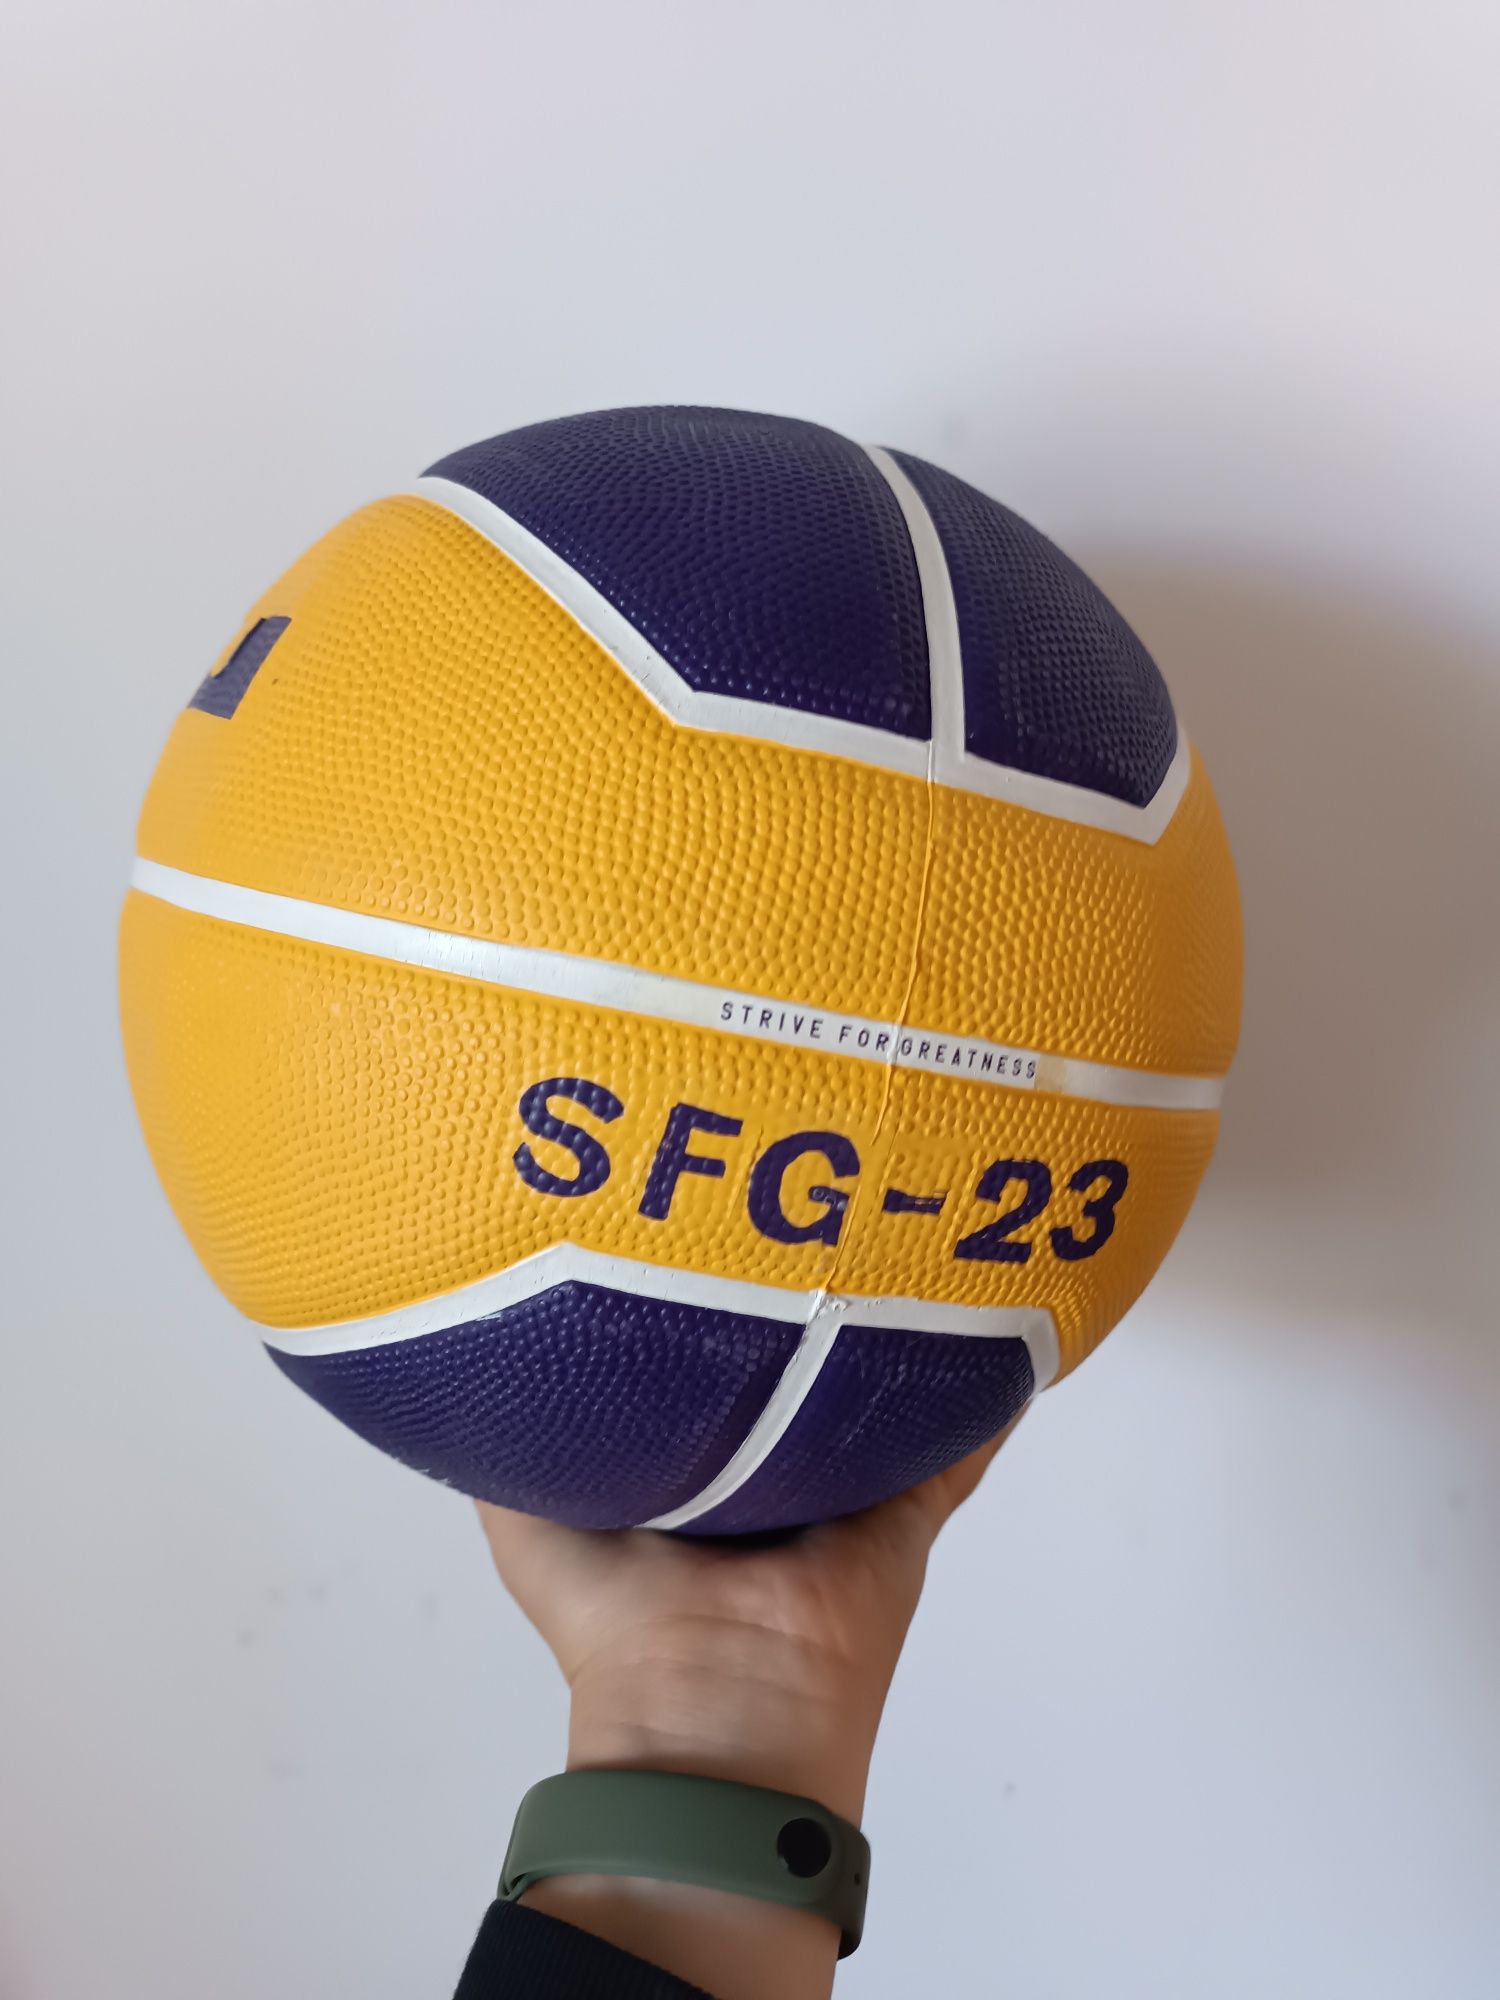 Баскетбольний м'яч Nike Lebron size 7
Size 7